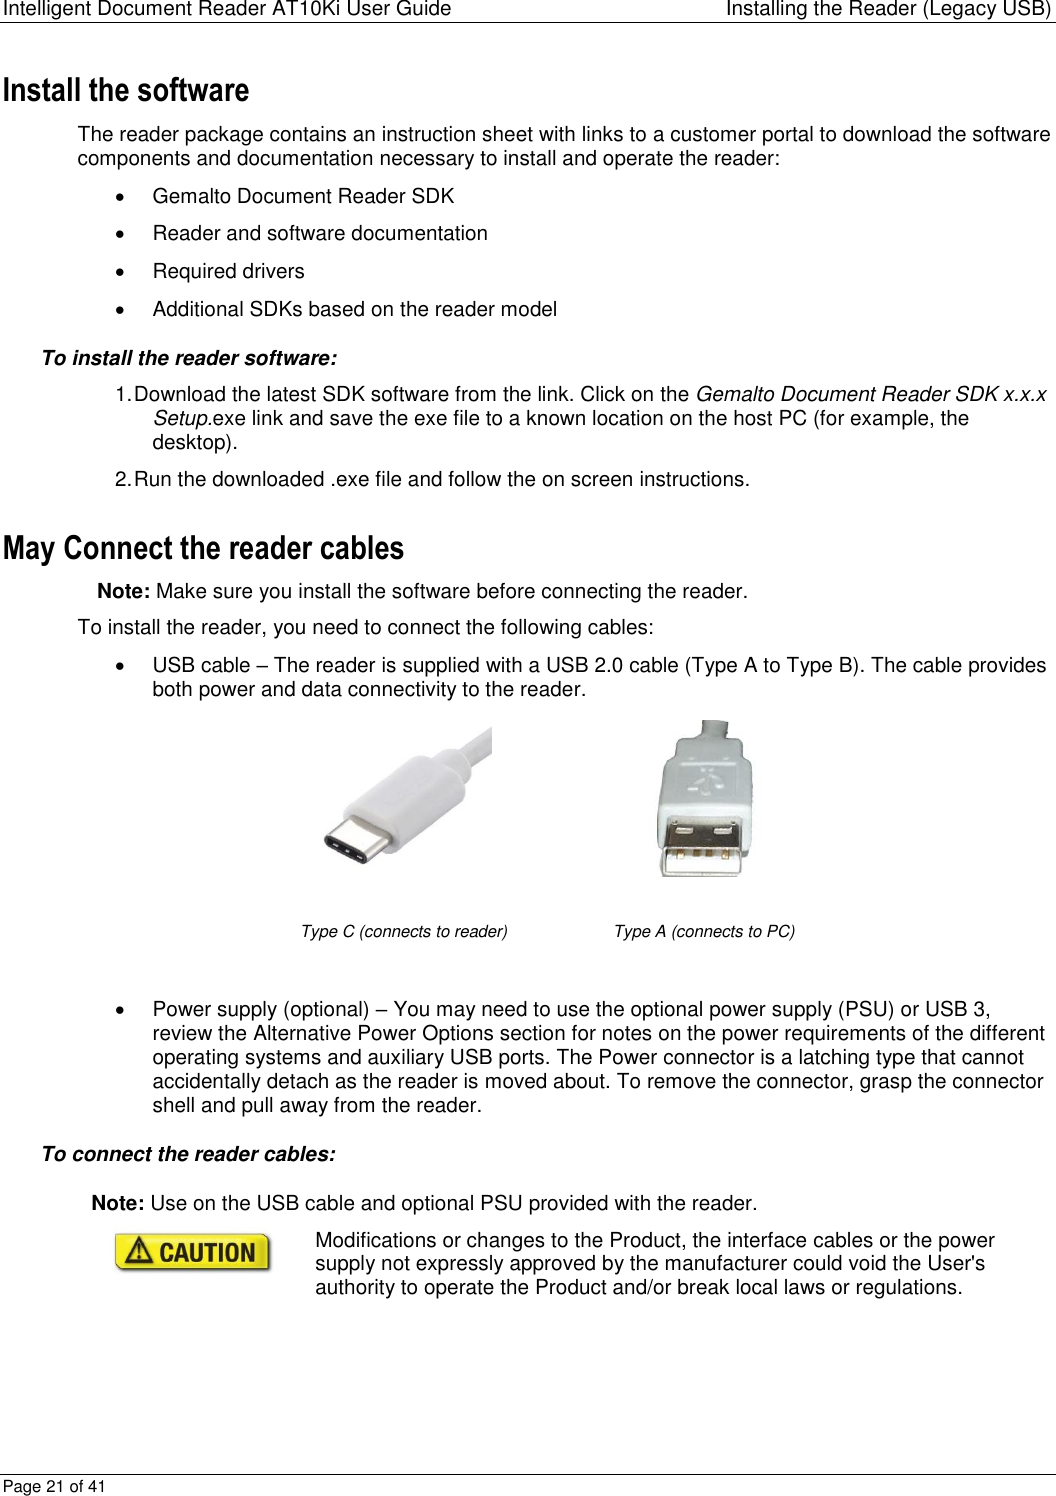 Page 21 of Thales DIS USA PR01523 ation Scanner User Manual